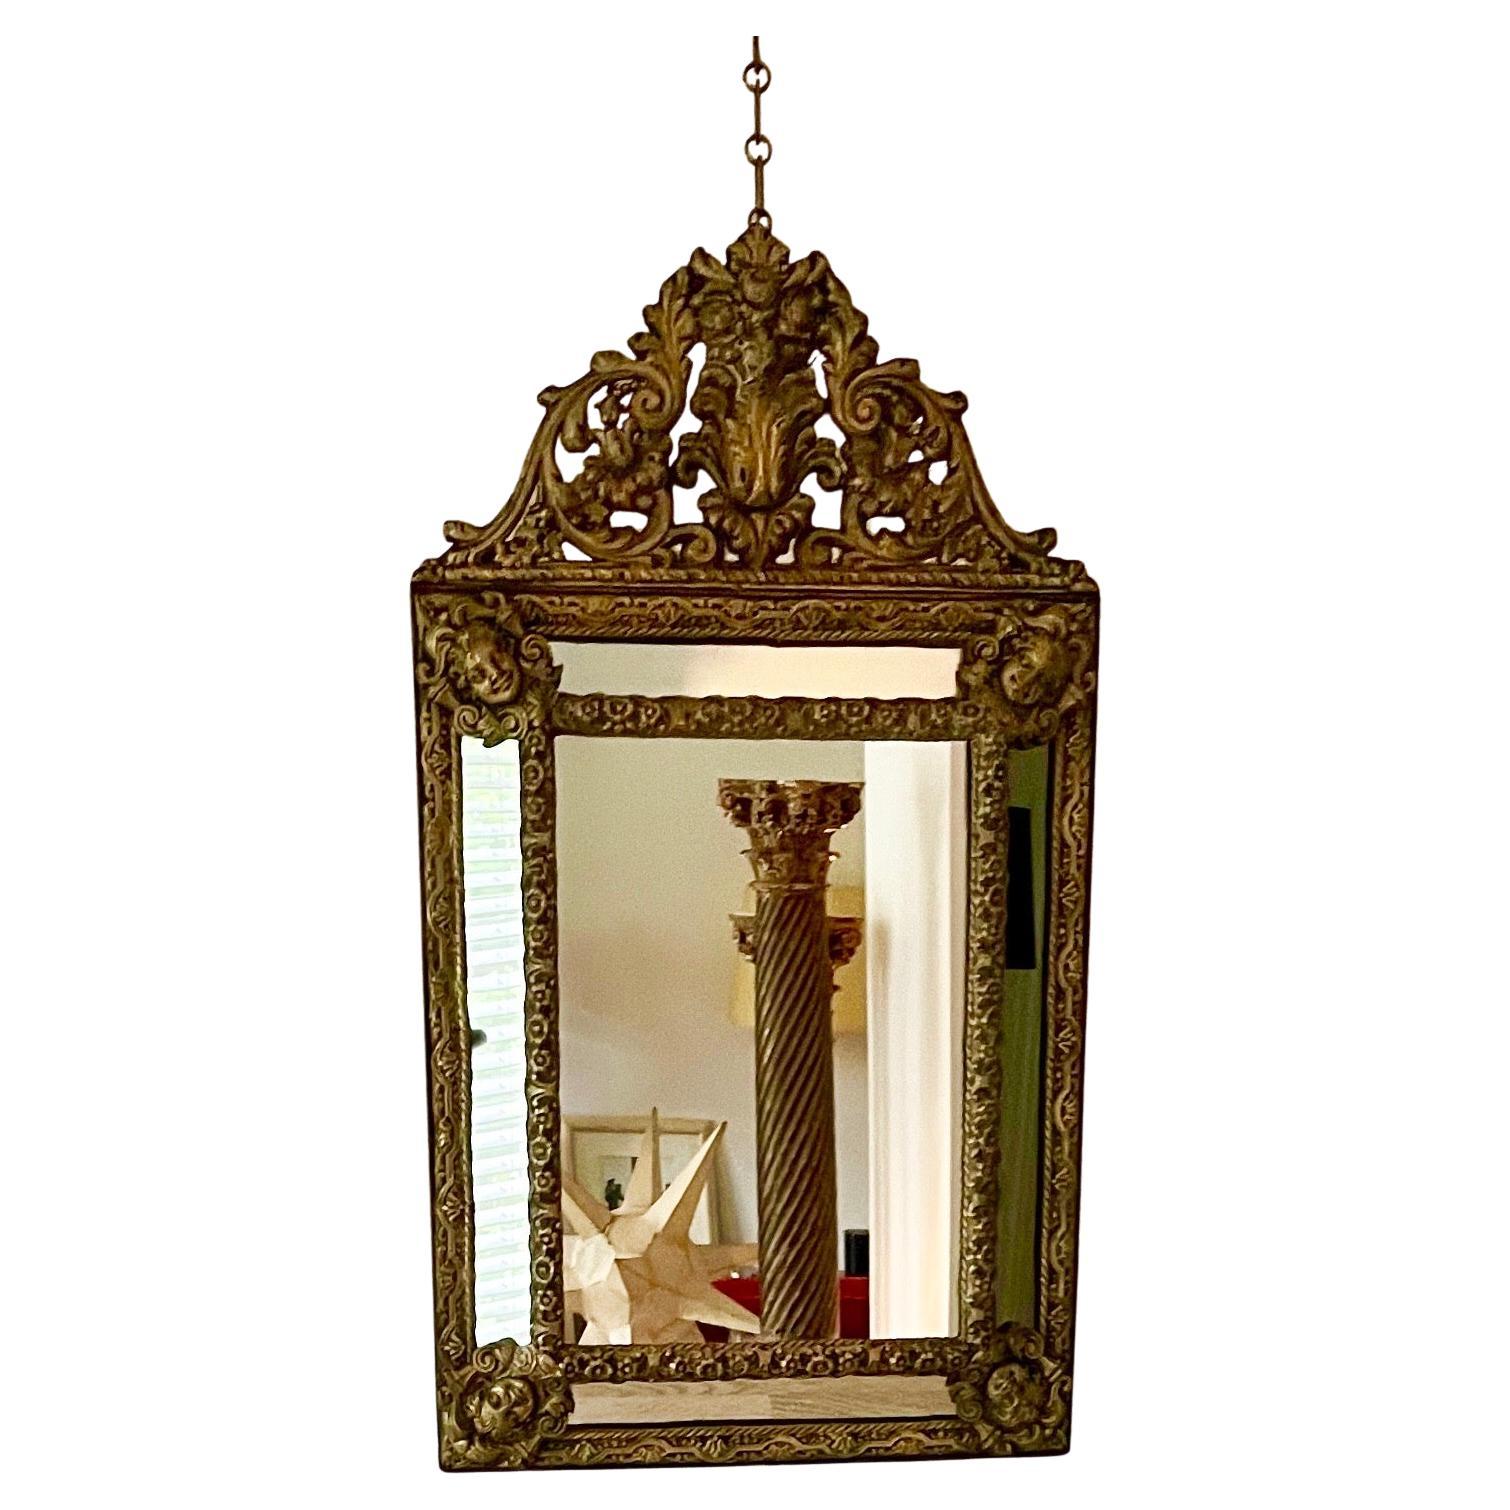 Très décoratif grand miroir de pareclose Napoléon III en 